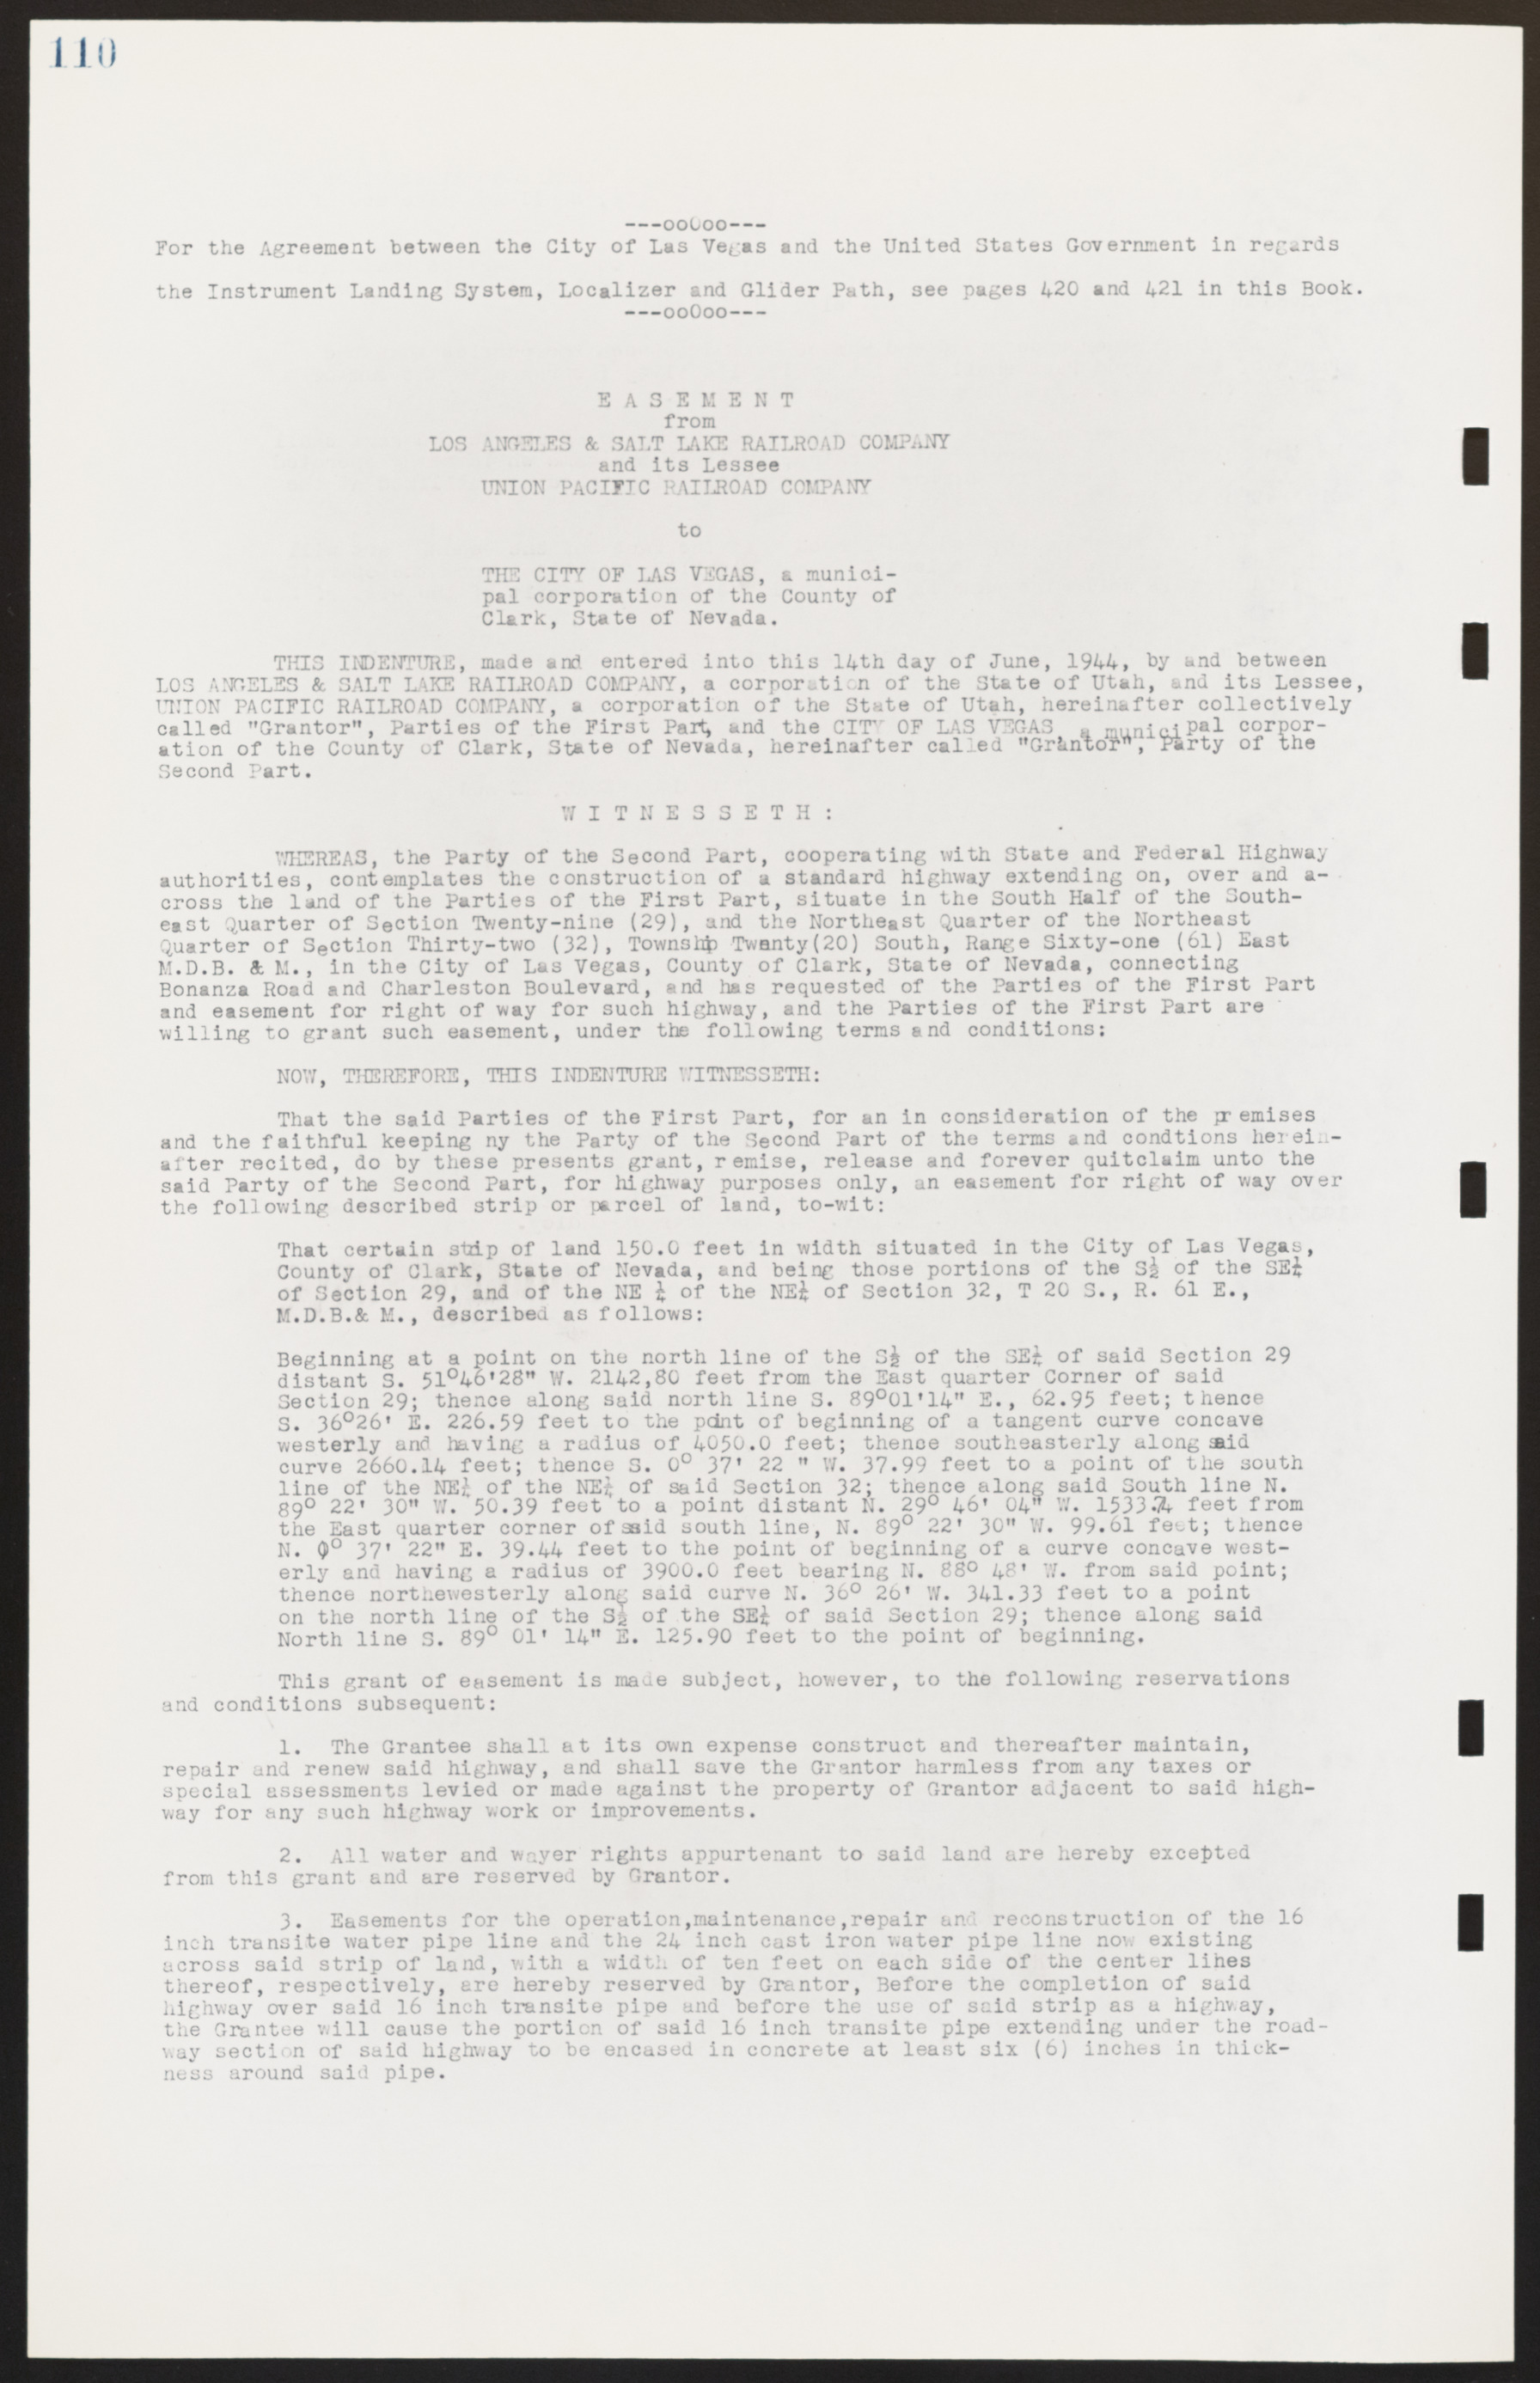 Las Vegas City Commission Legal Documents, February 29, 1944 to February 21, 1945, lvc000016-40